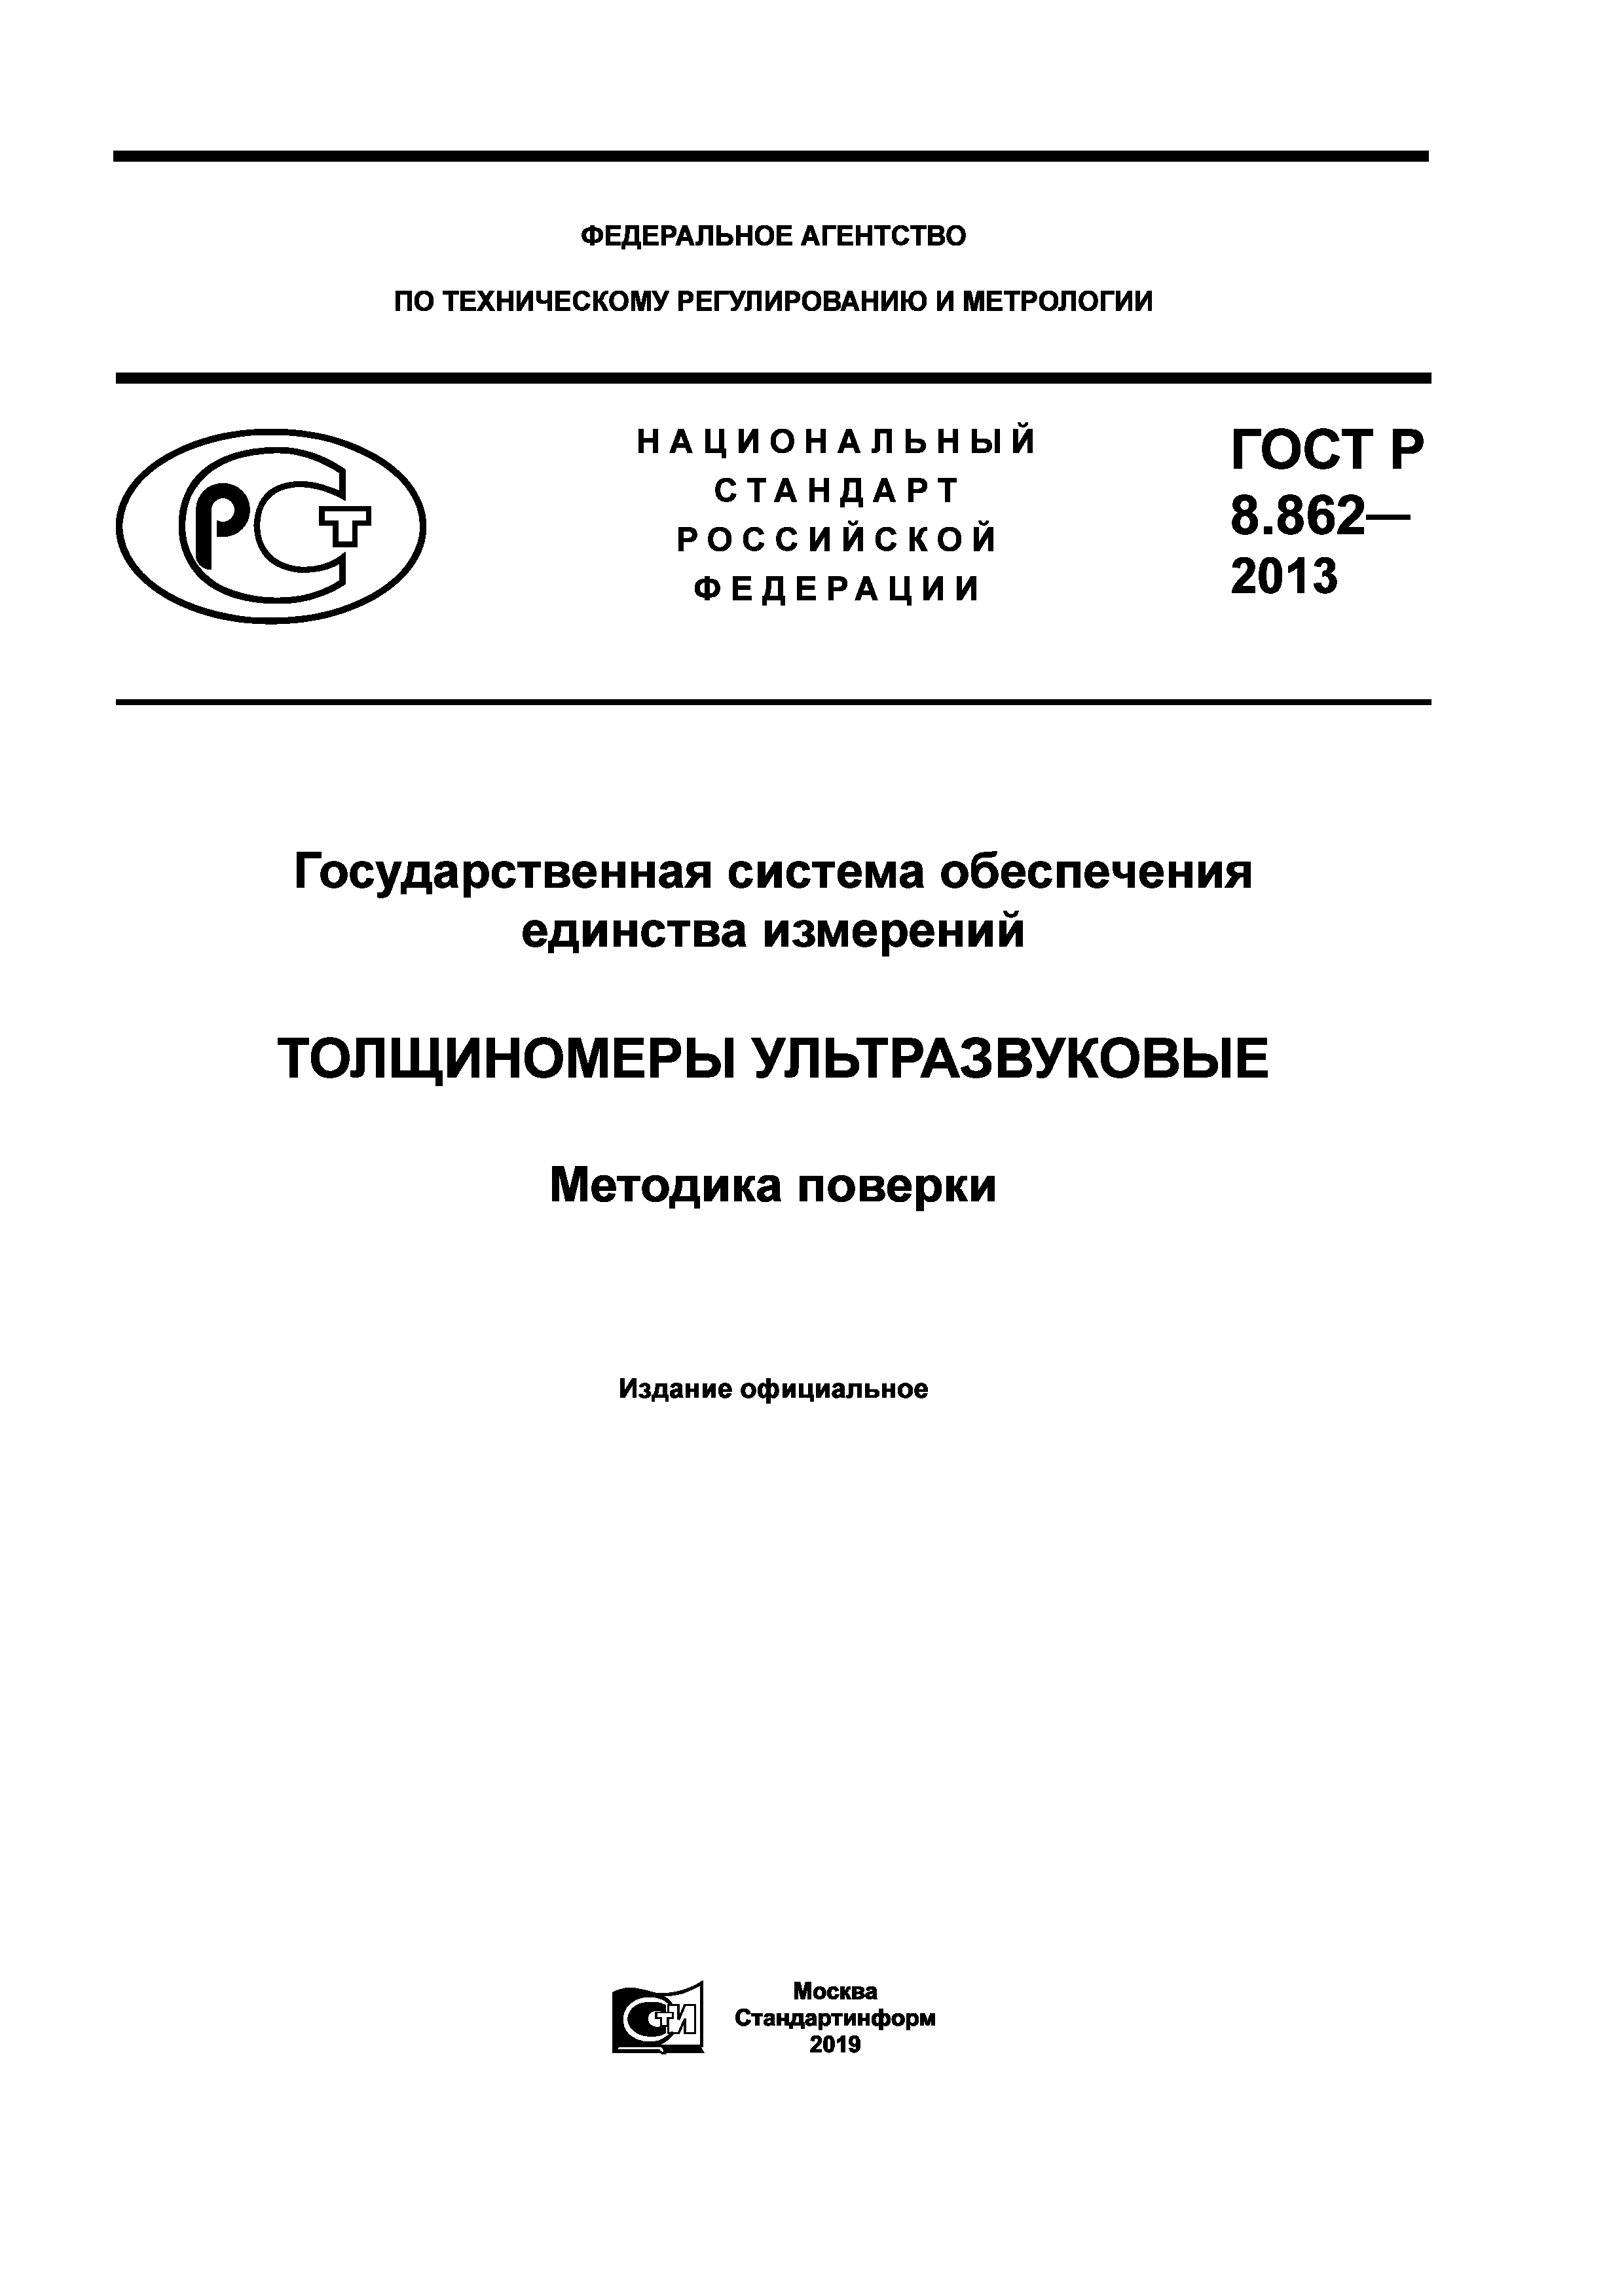 ГОСТ Р 8.862-2013